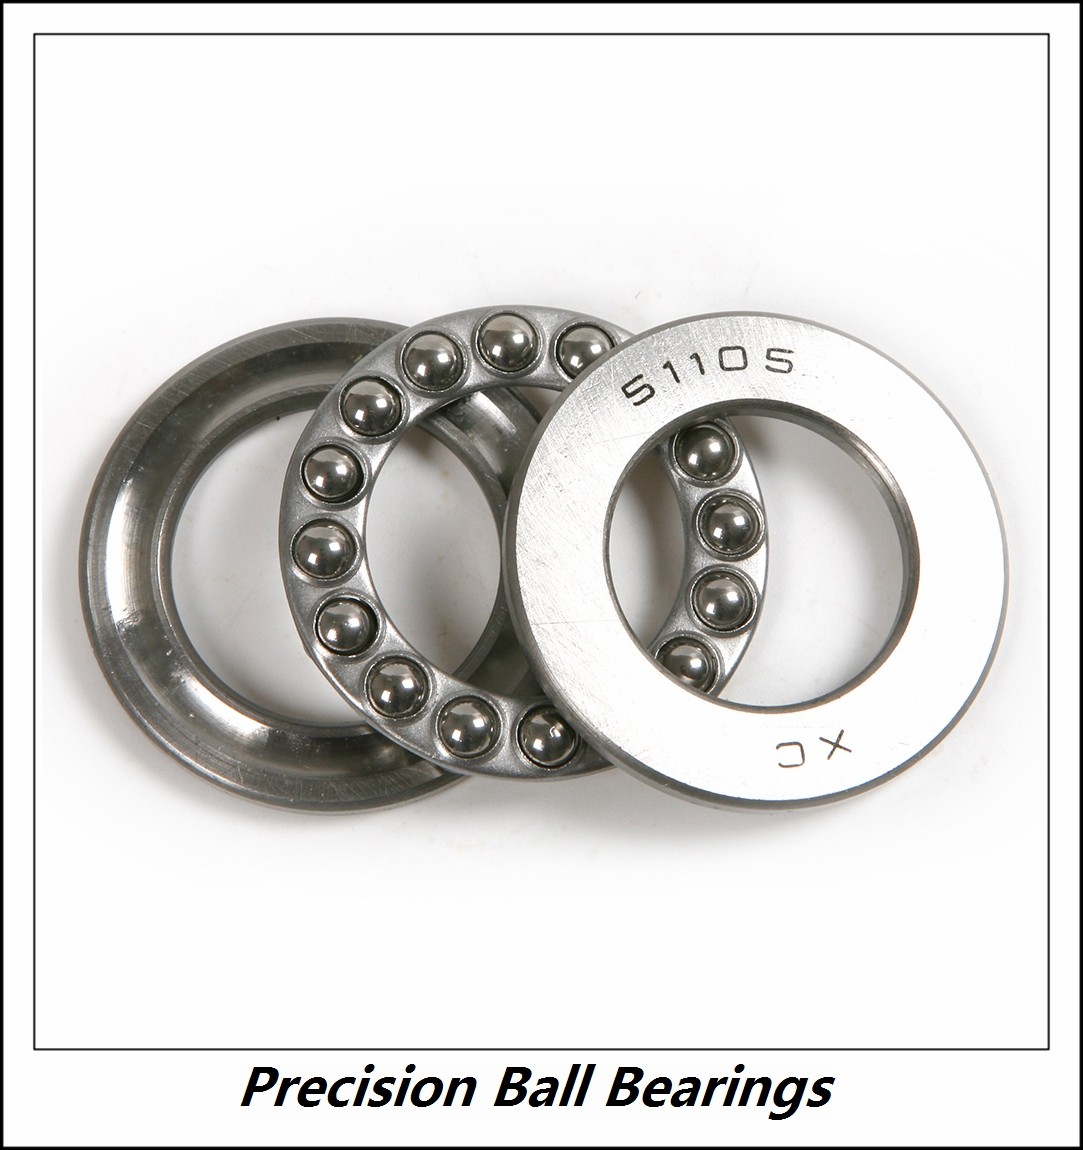 1.575 Inch | 40 Millimeter x 3.543 Inch | 90 Millimeter x 2.362 Inch | 60 Millimeter  NTN 2A-BST40X90-1BDFTP4  Precision Ball Bearings